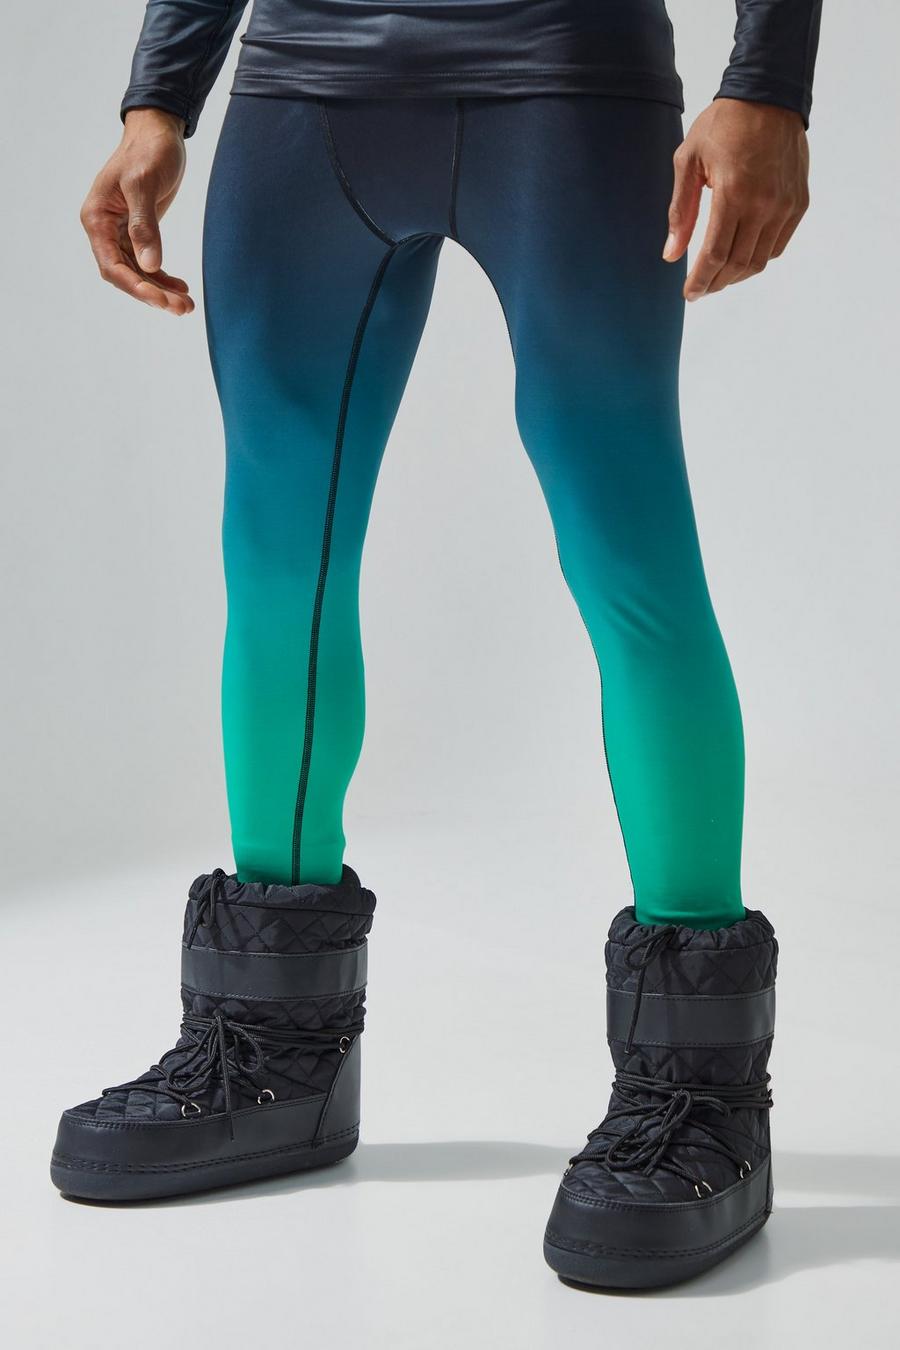 Green Pants have an elasticized drawstring waist and elastic leg openings